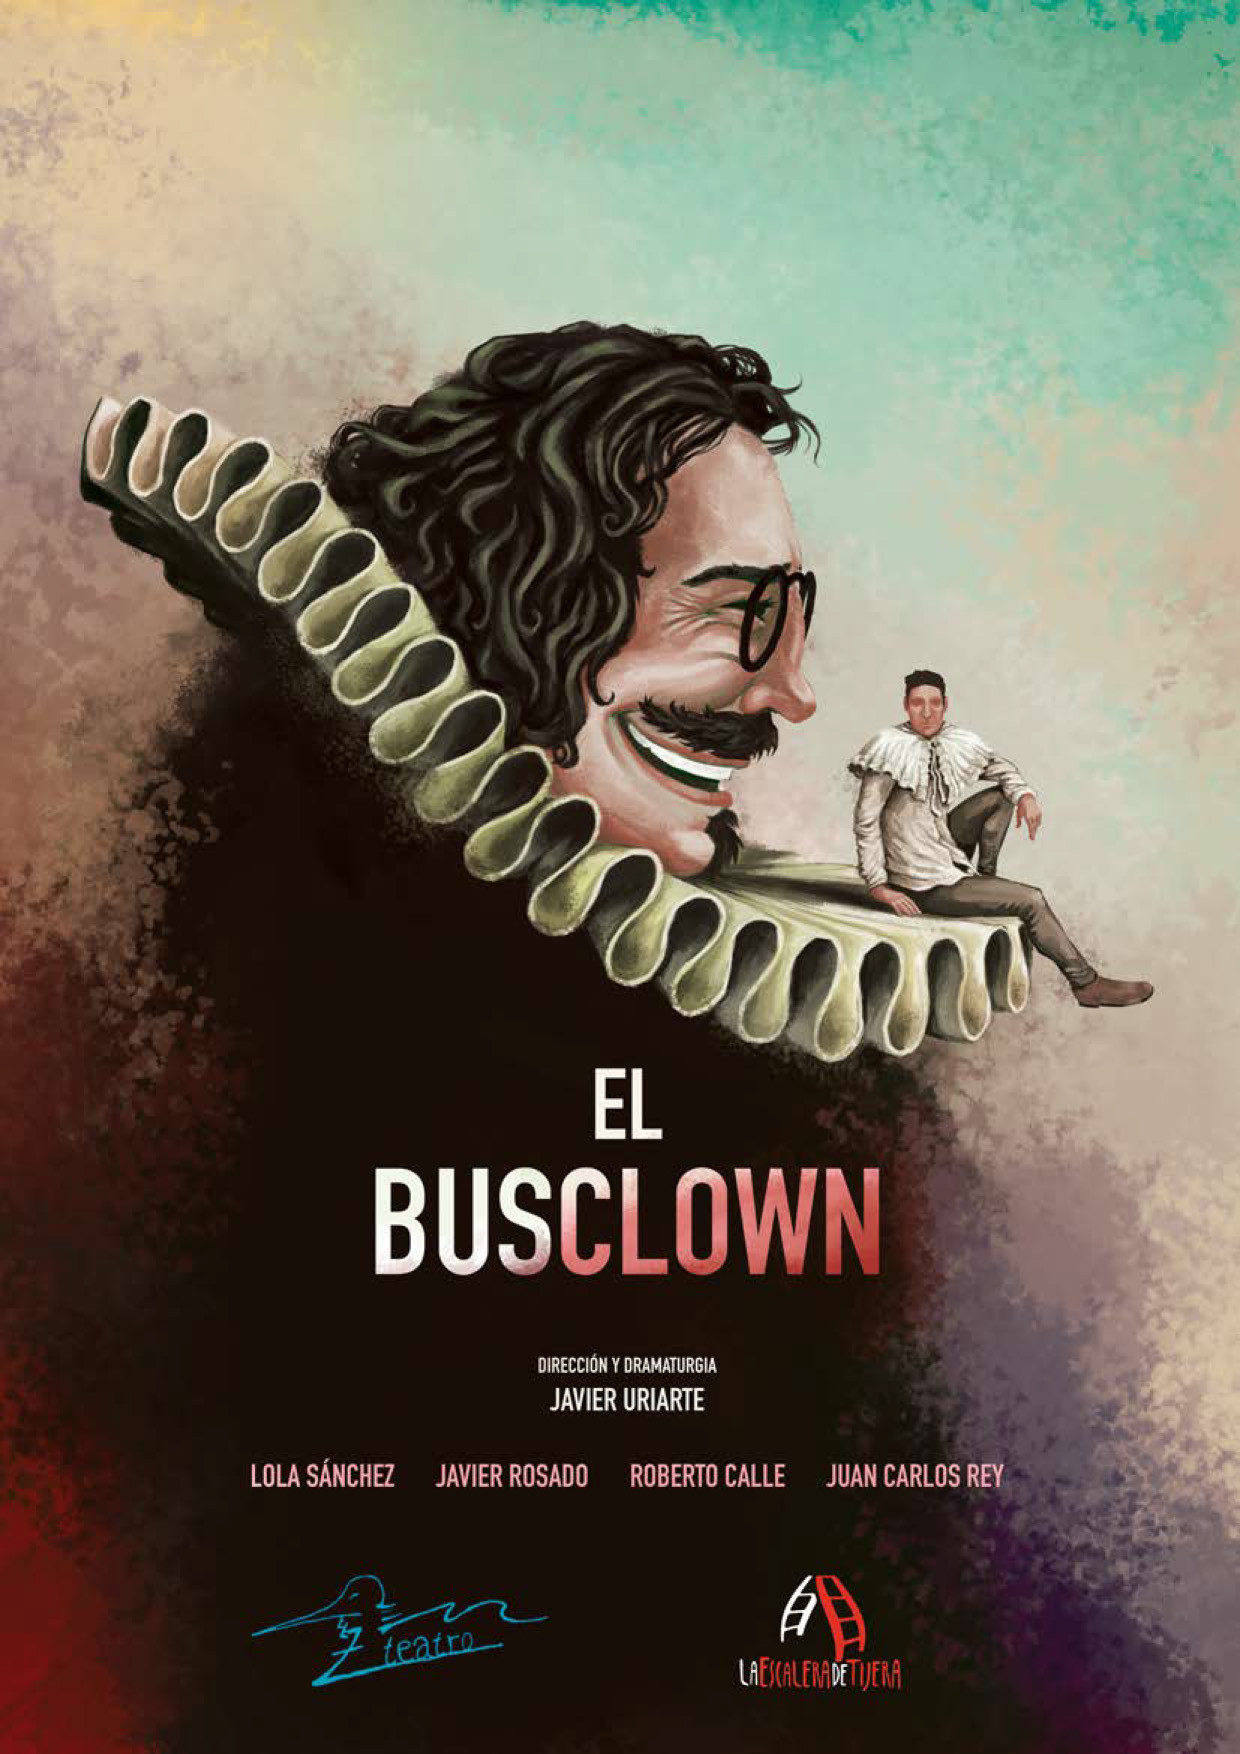 El Busclown